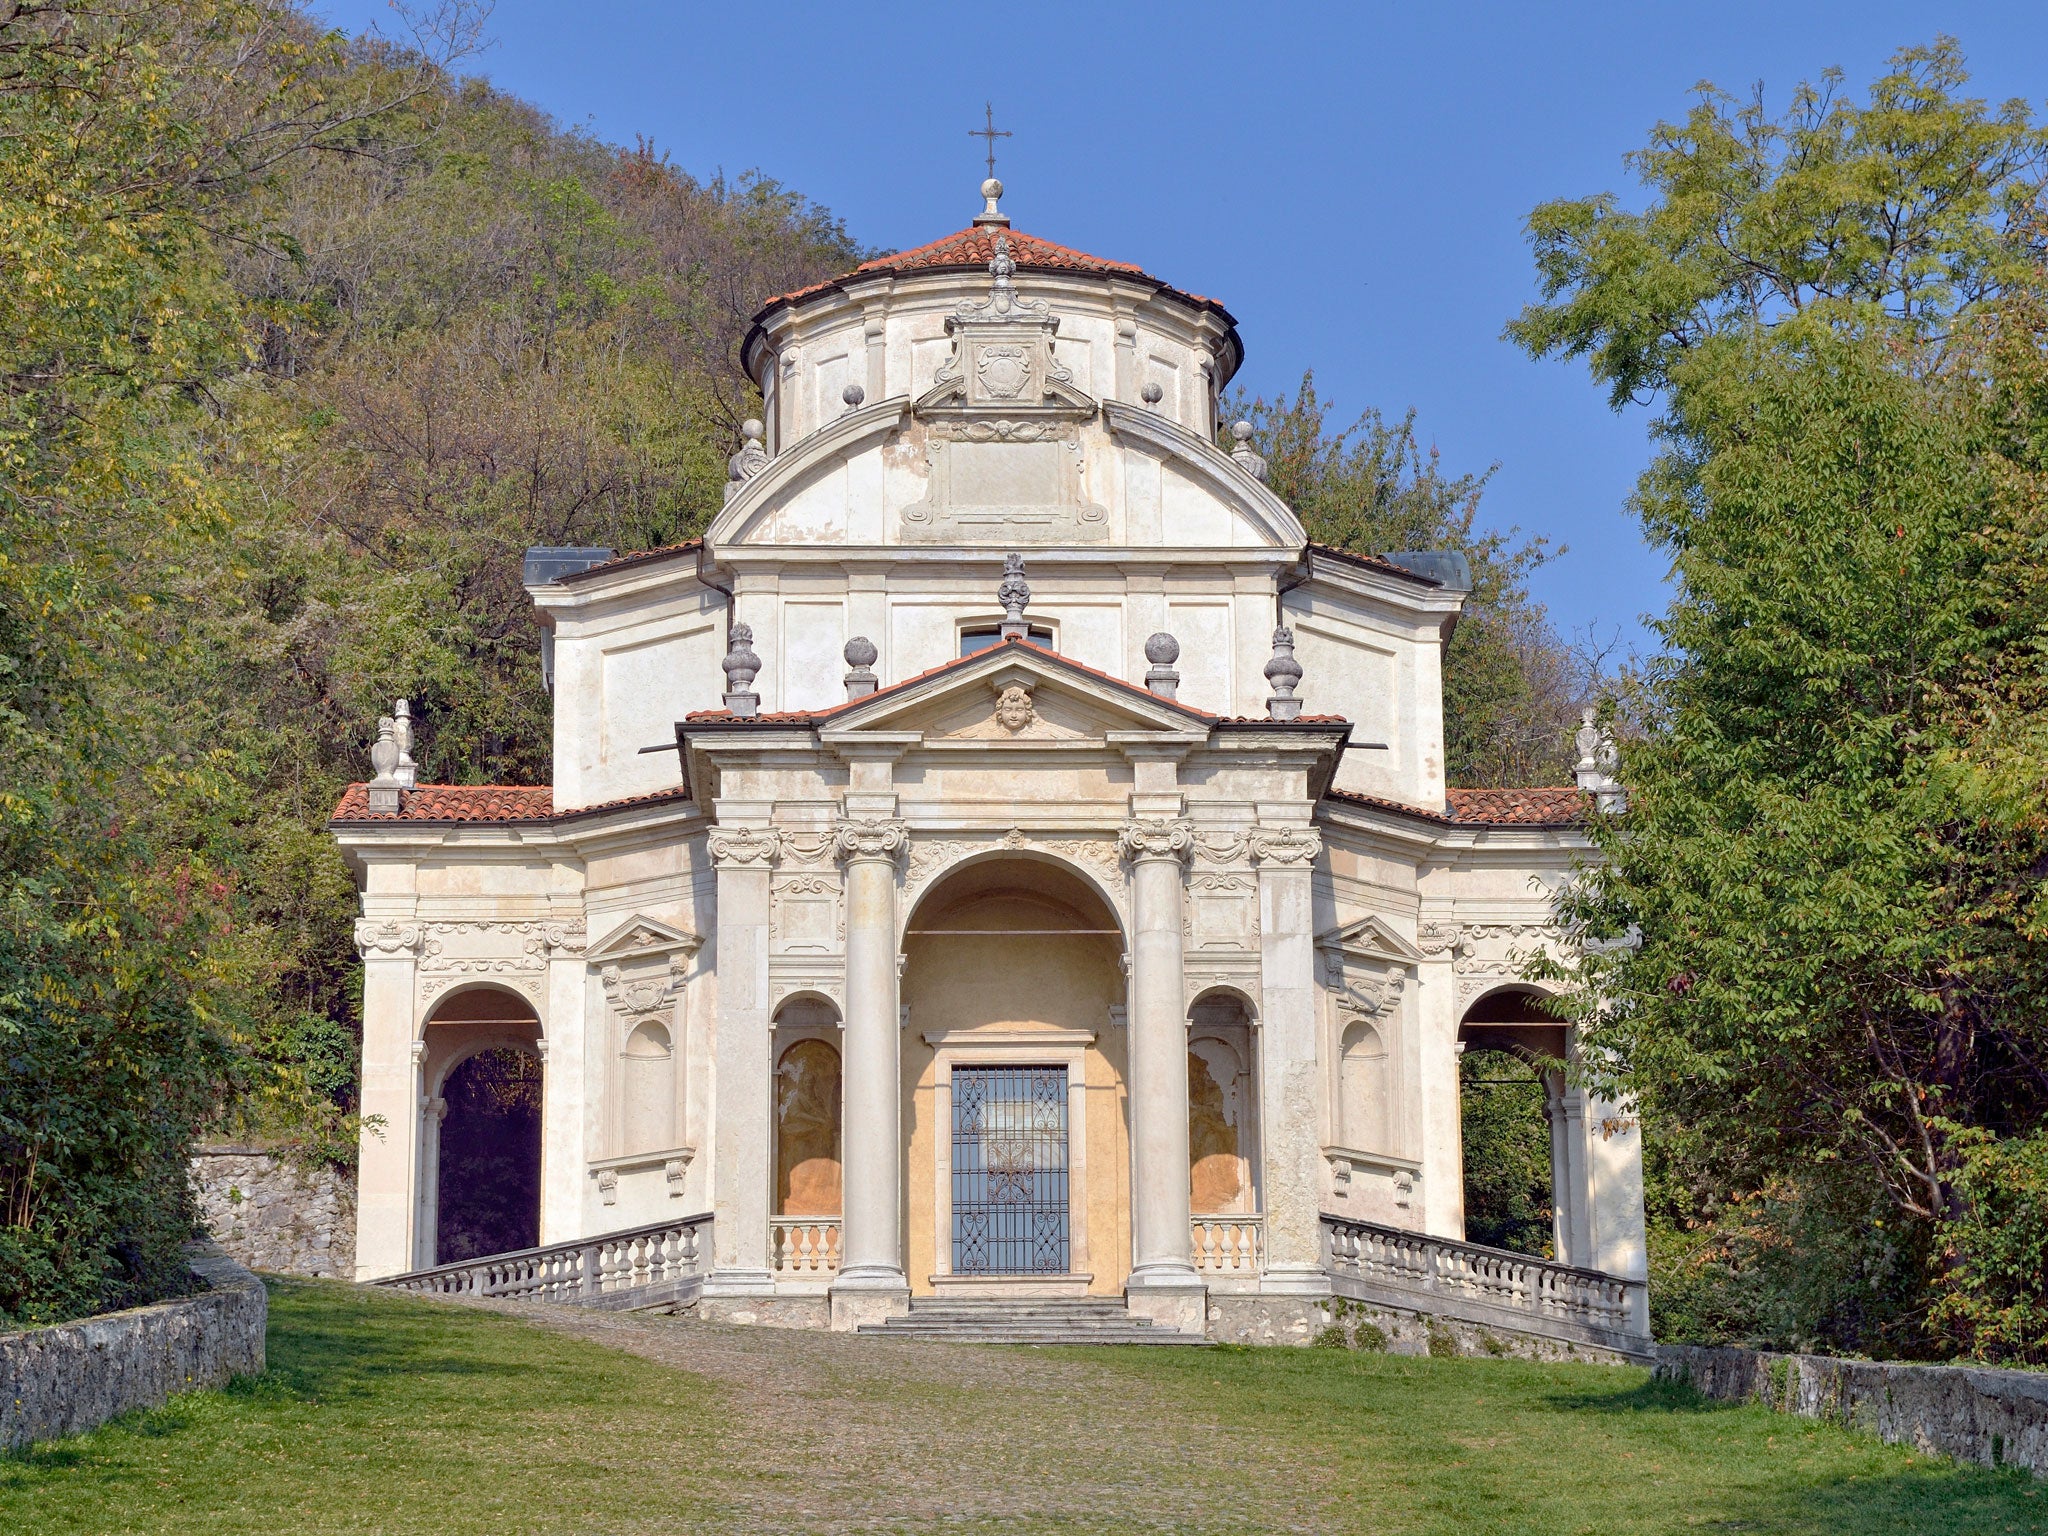 The 14th-century sanctuary of Santa Maria del Monte